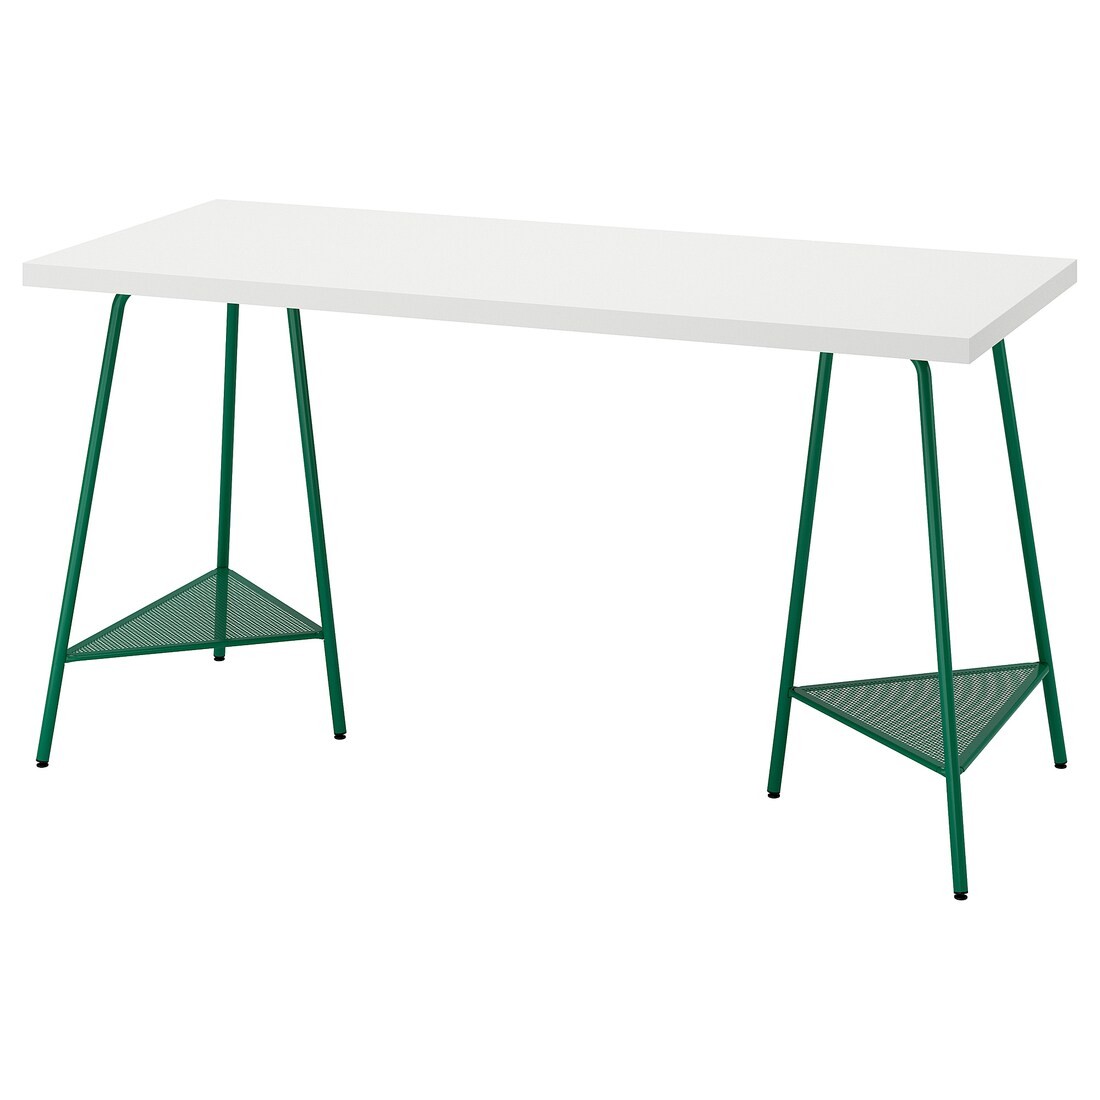 LAGKAPTEN ЛАГКАПТЕН / TILLSLAG ТИЛЛЬСЛАГ Письменный стол, белый / зеленый, 140x60 см